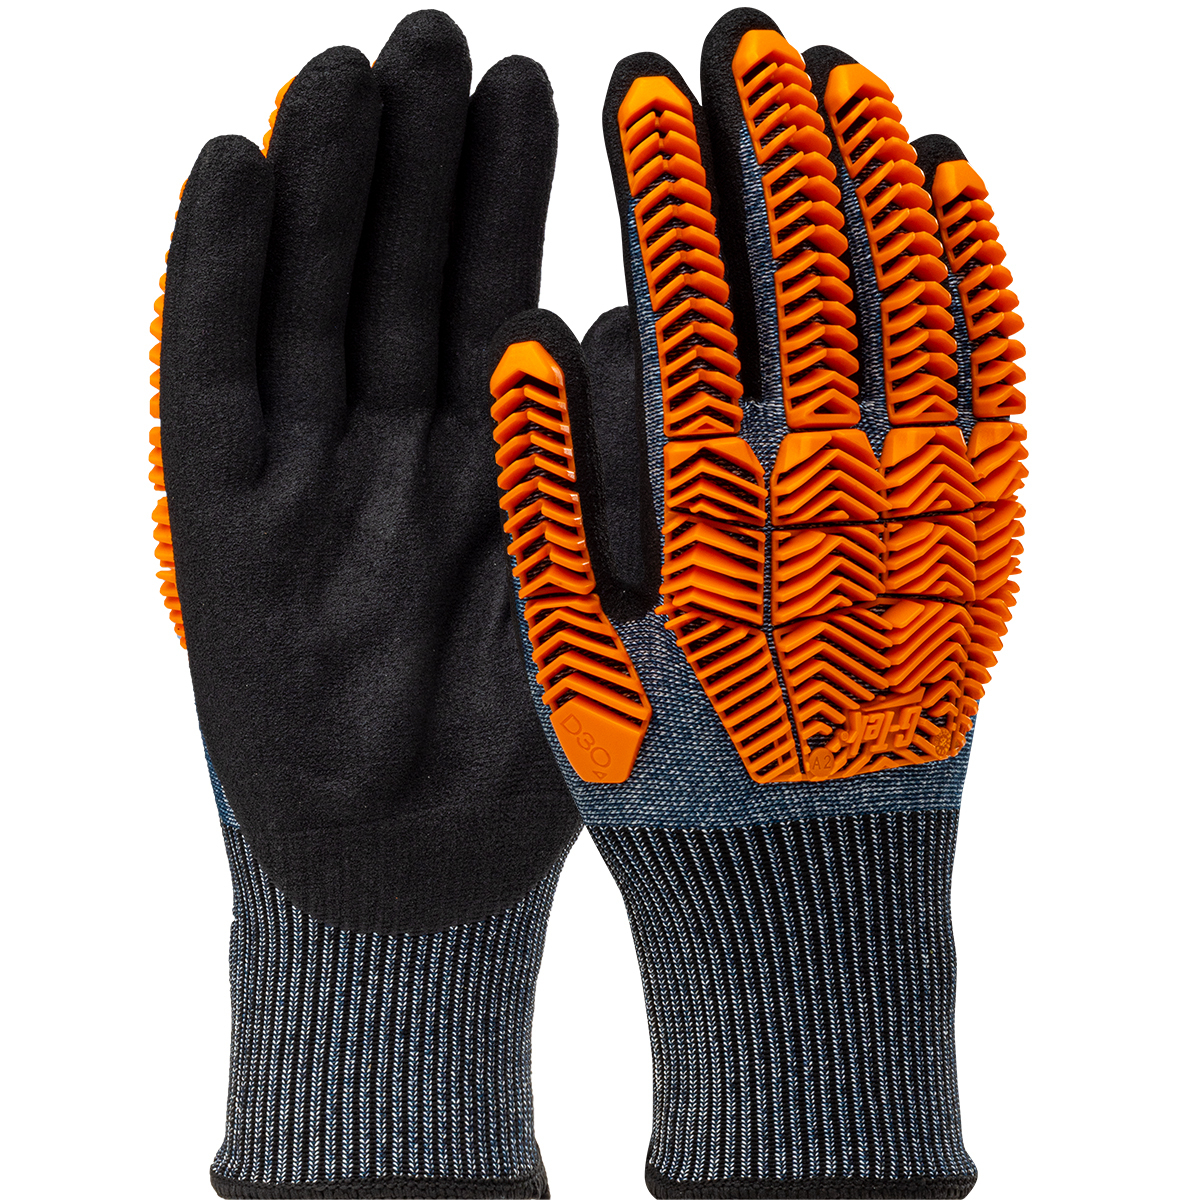 G-TEK POLYKOR D3O IMPACT GLOVE - Cut Resistant Gloves